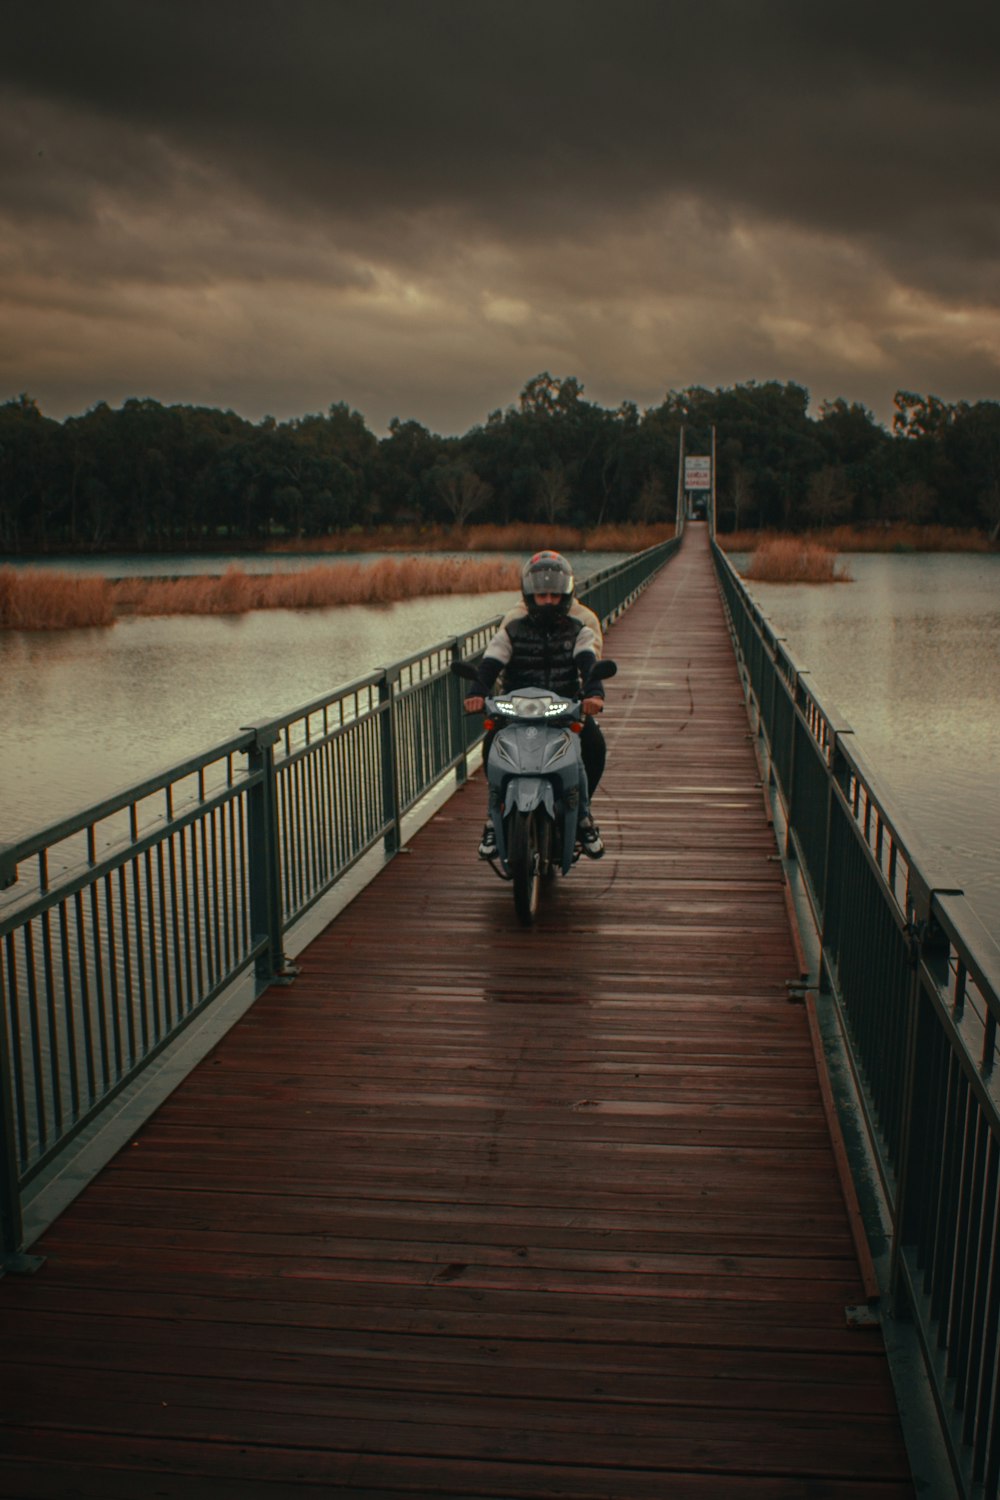 a man riding a motorcycle across a wooden bridge